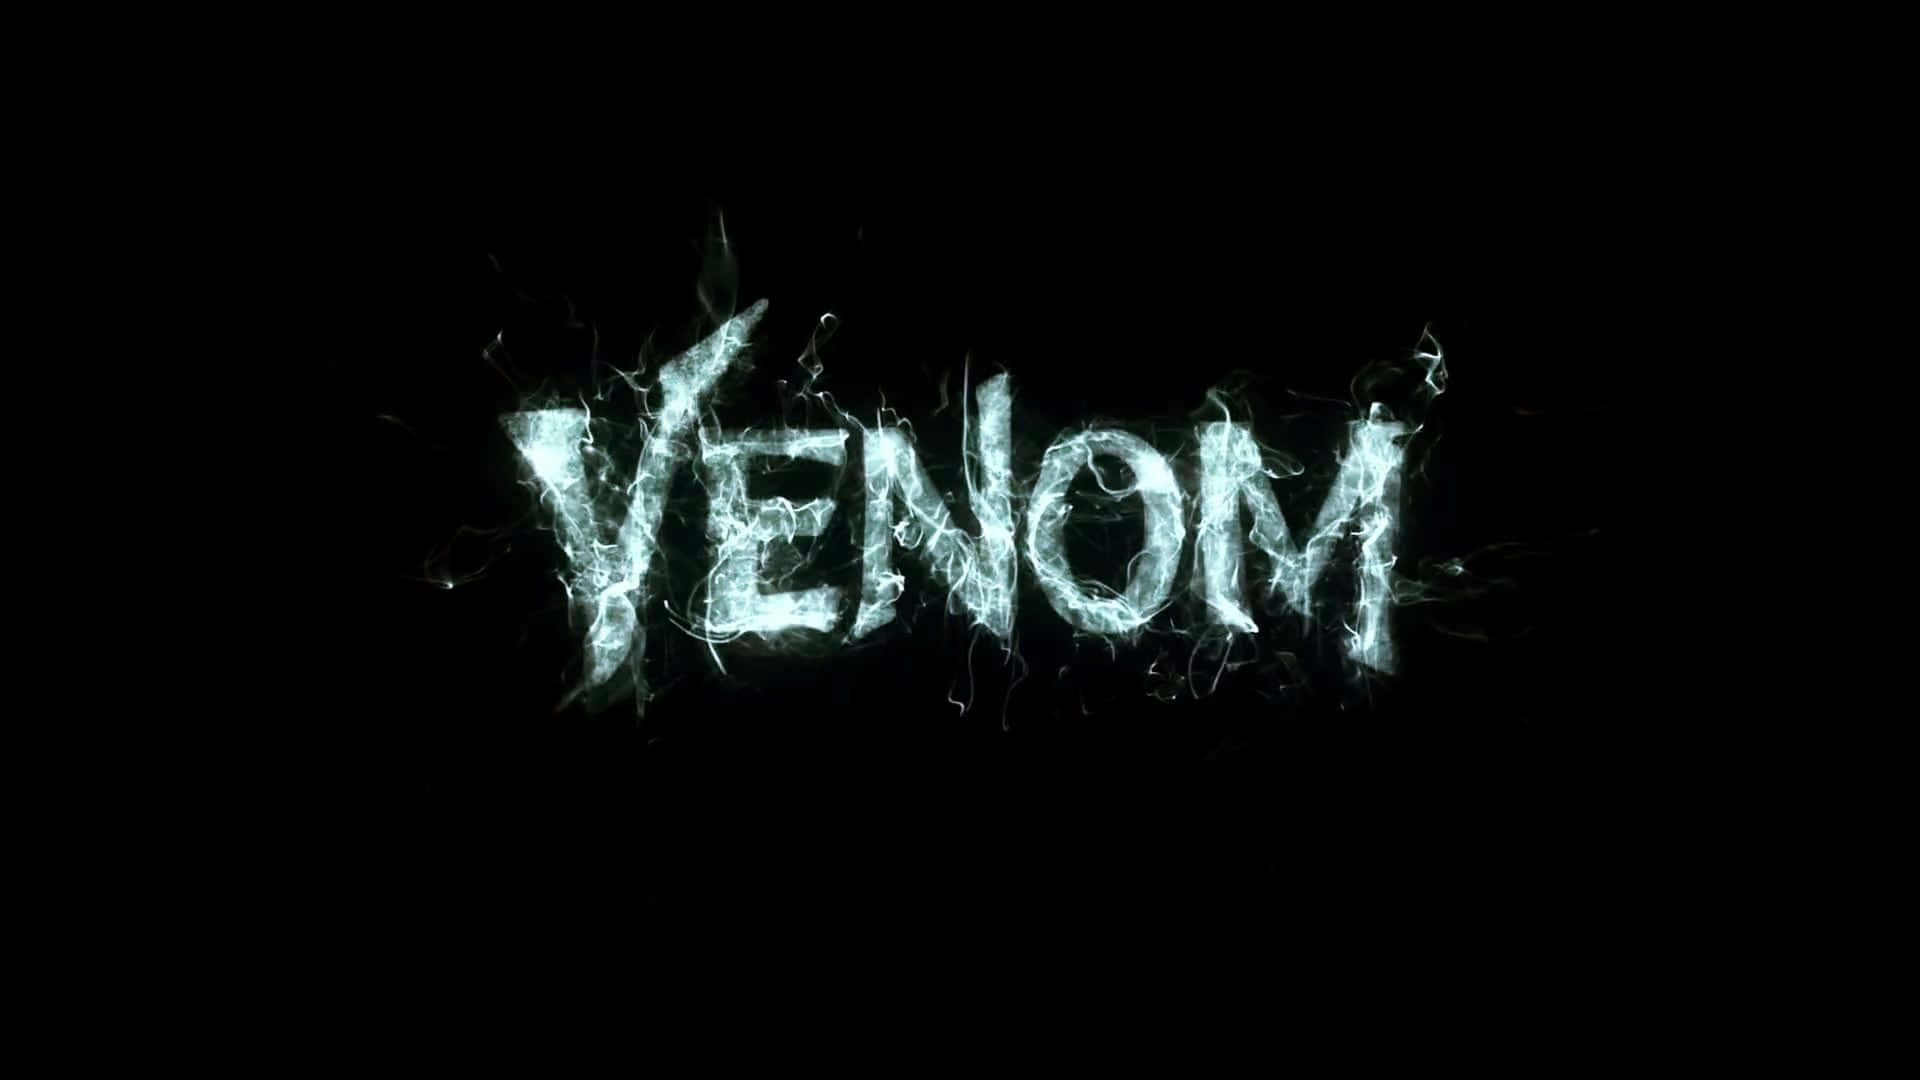 Venom Logo On A Black Background Wallpaper